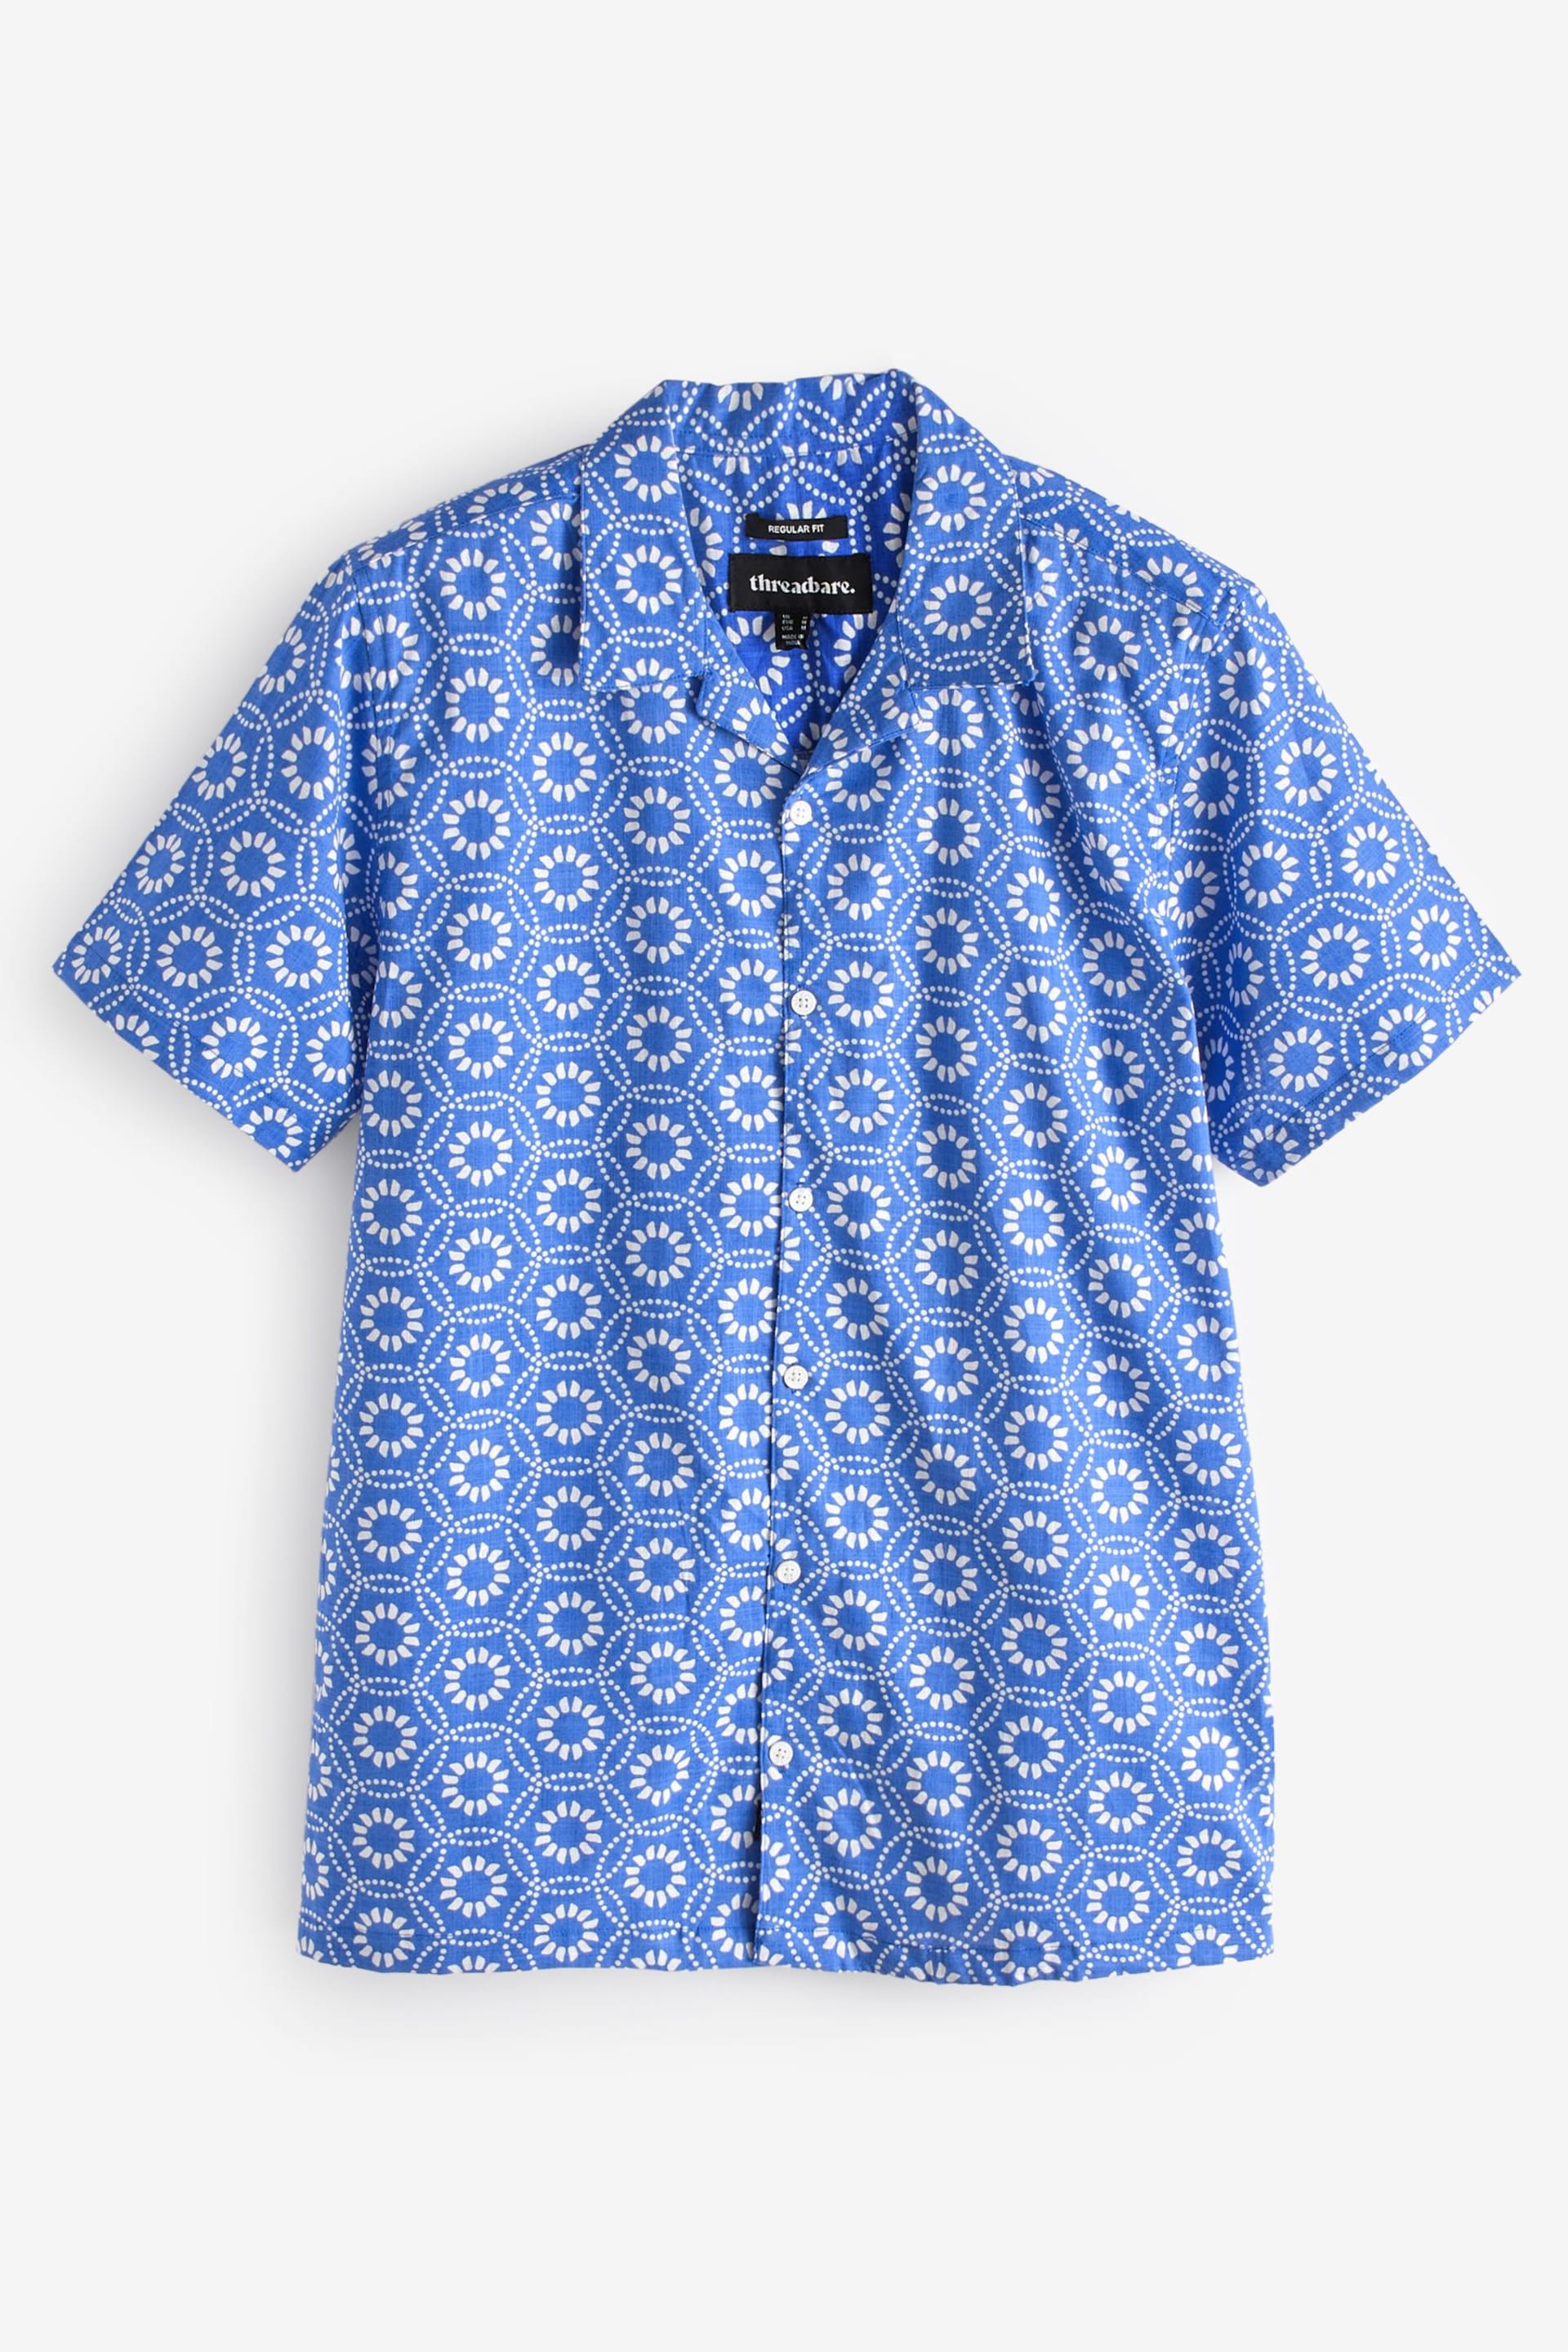 Threadbare Bright Blue Short Sleeve Floral Print Cotton Shirt - Image 5 of 5